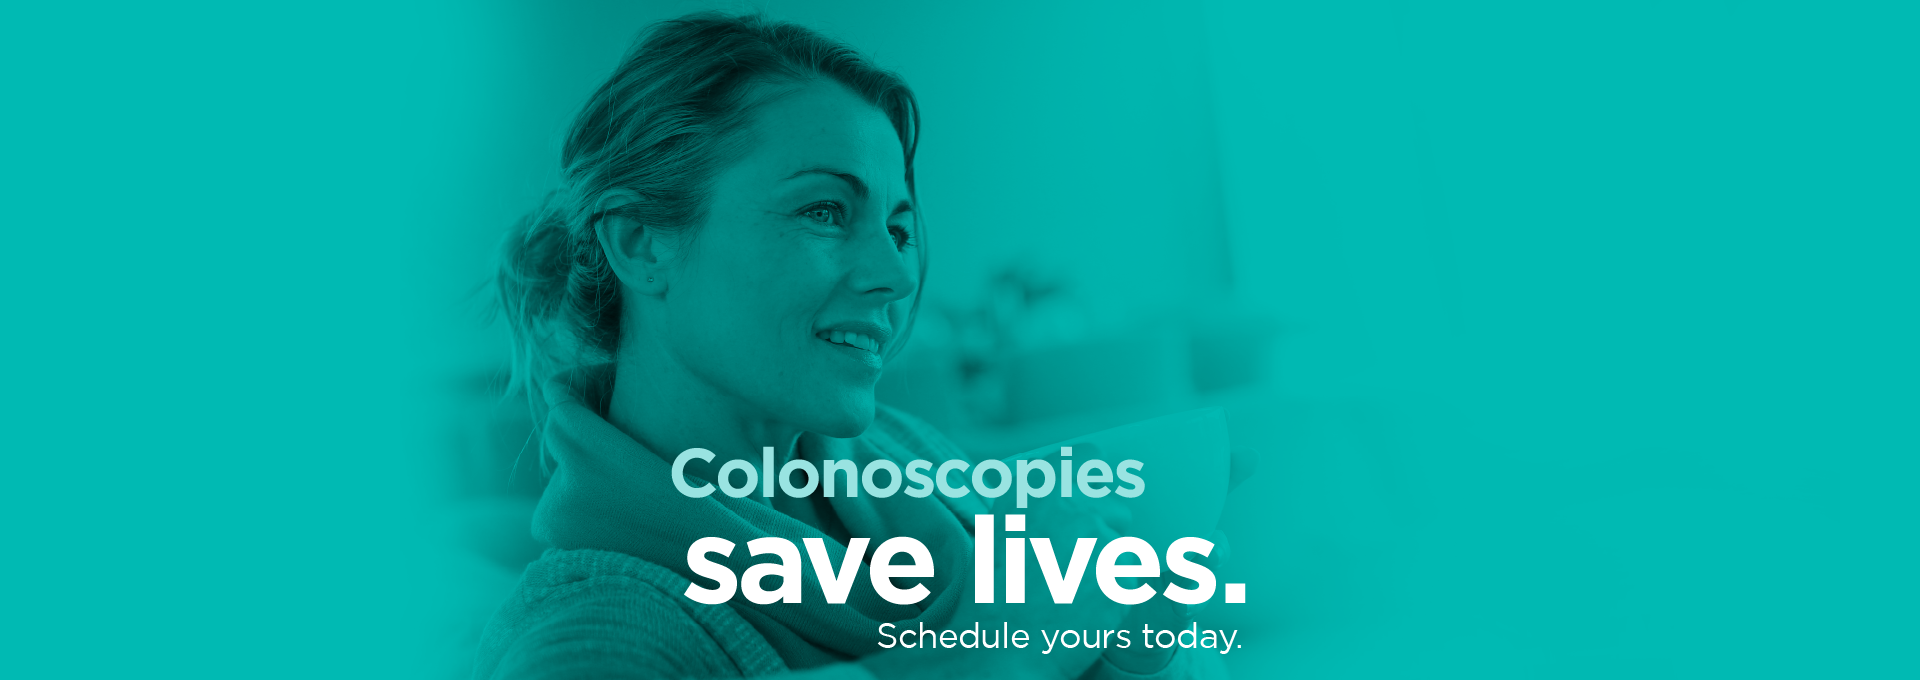 Colonoscopies Save Lives